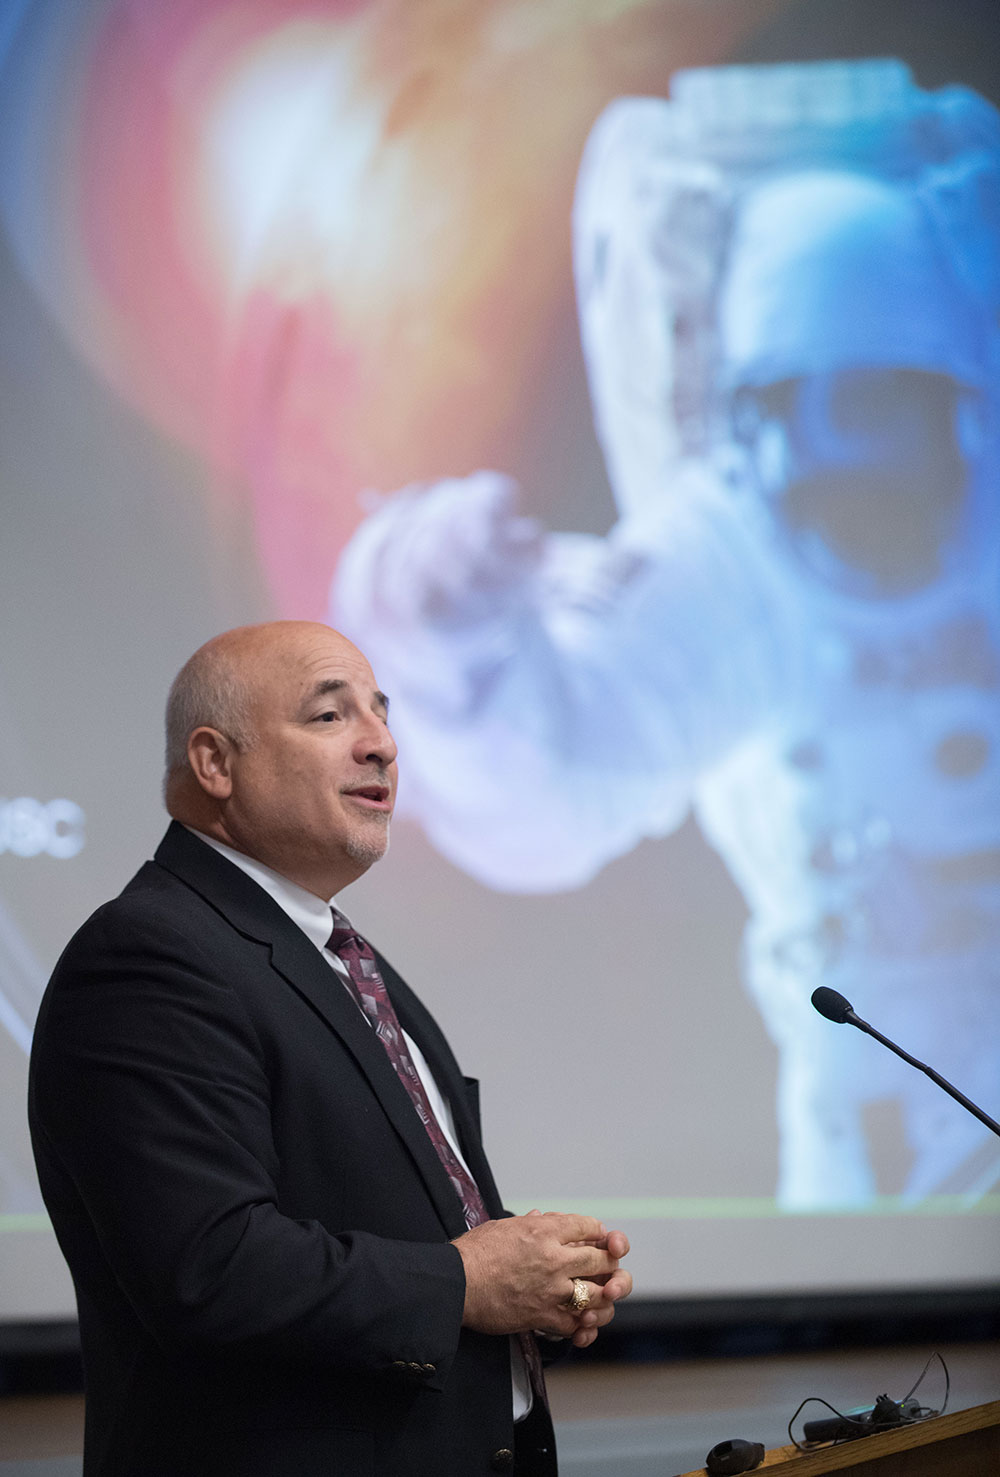 Joe Caram giving a NASA presentation at a podium with an astronaut image behind him.